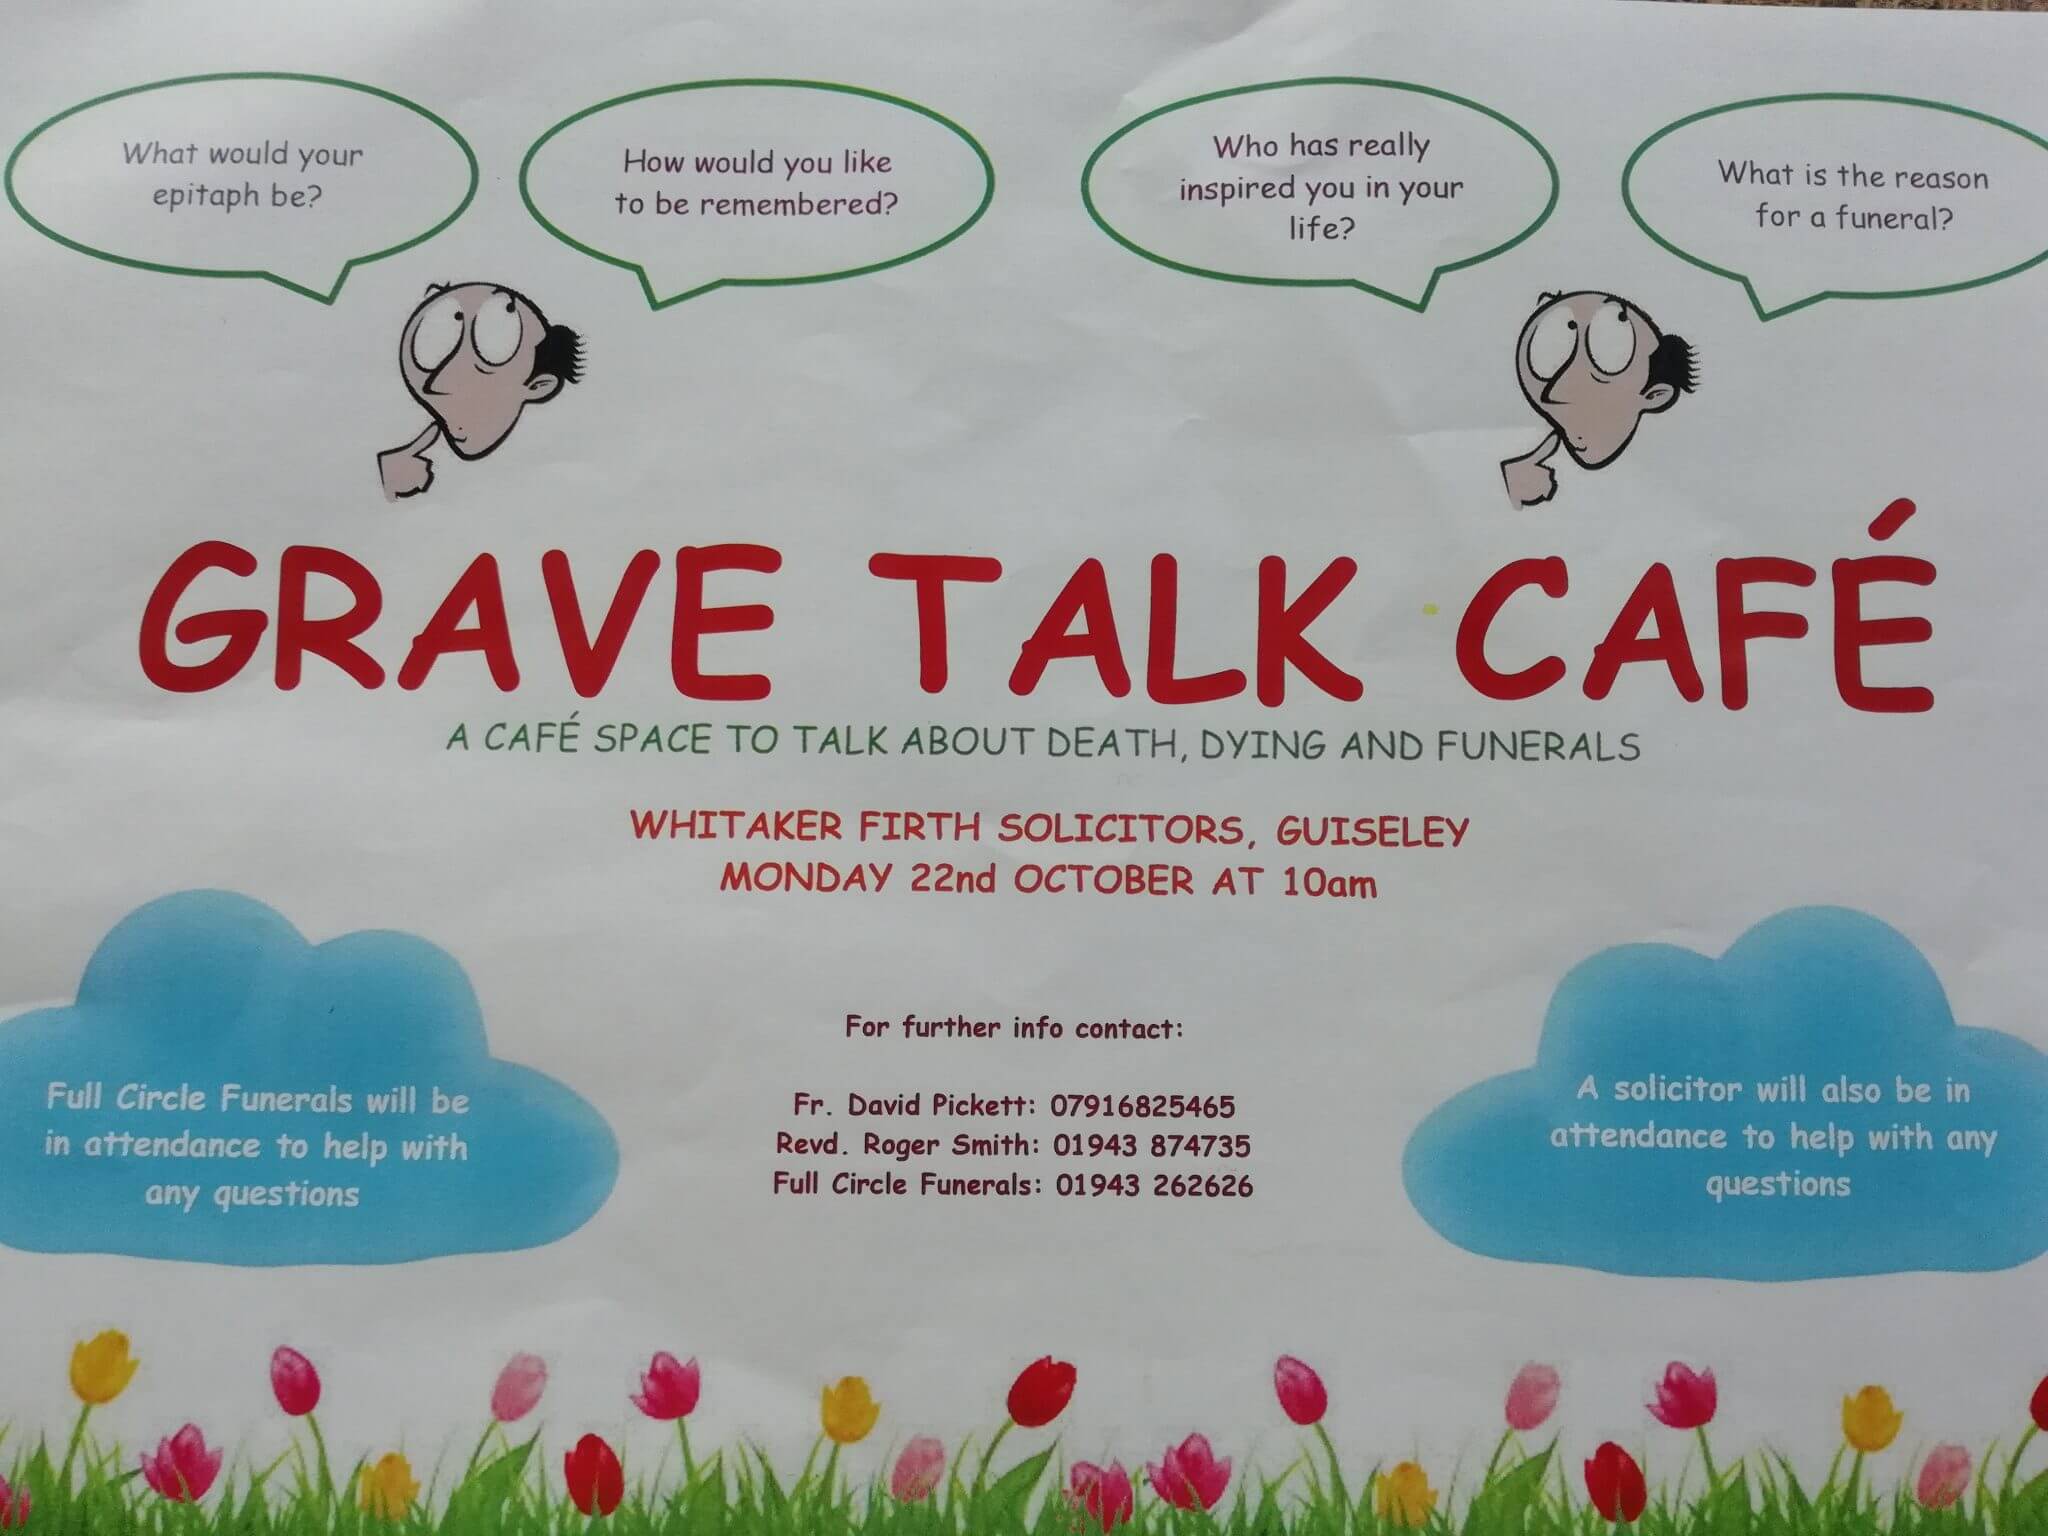 Grave talk cafe invite